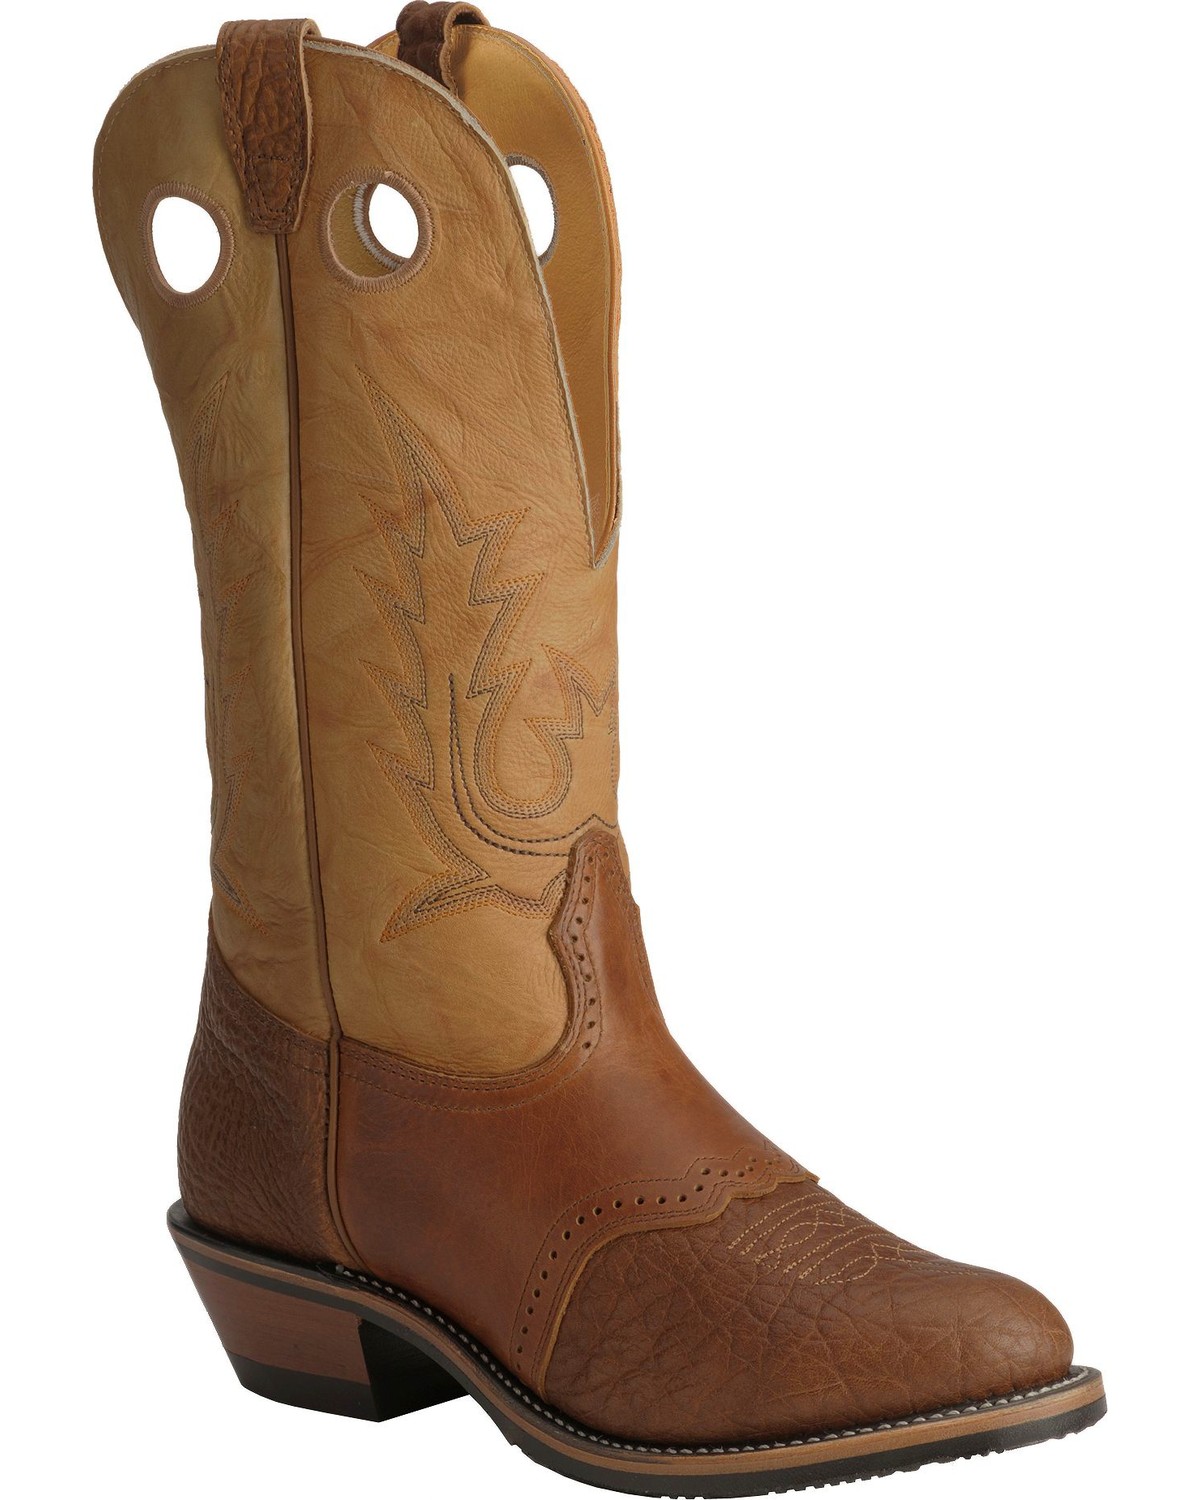 Boulet Men's Buckaroo Saddle Western Boots - Round Toe